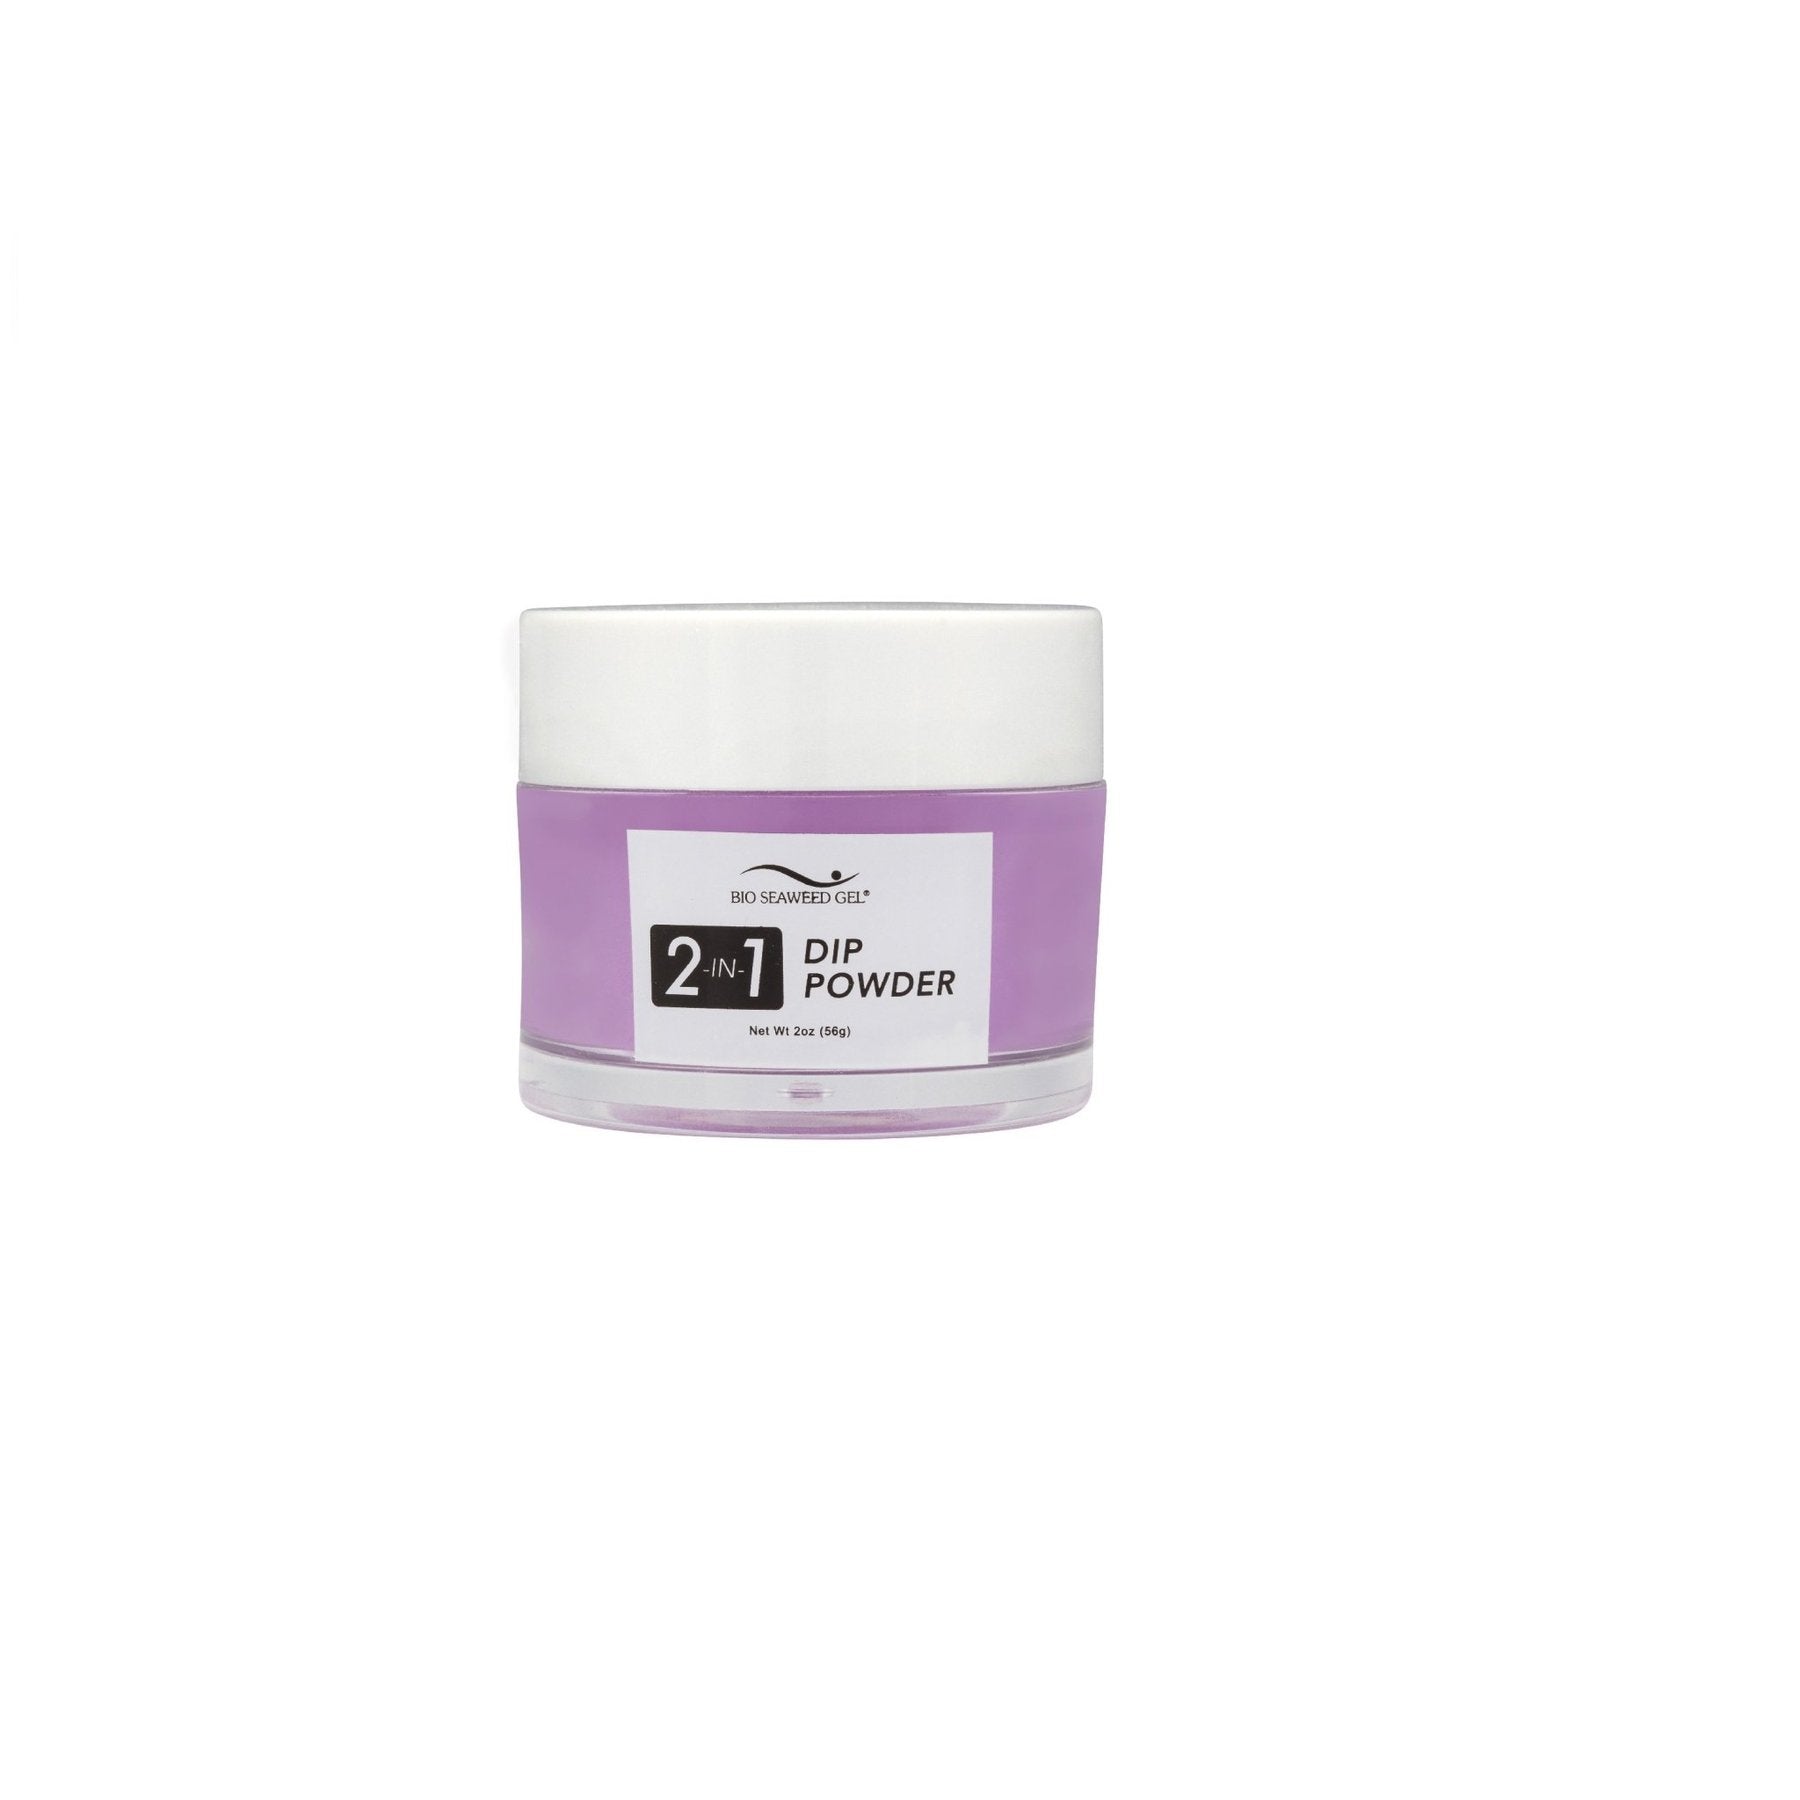 37 BERRY SWEET | Bio Seaweed Gel® Dip Powder System - CM Nails & Beauty Supply